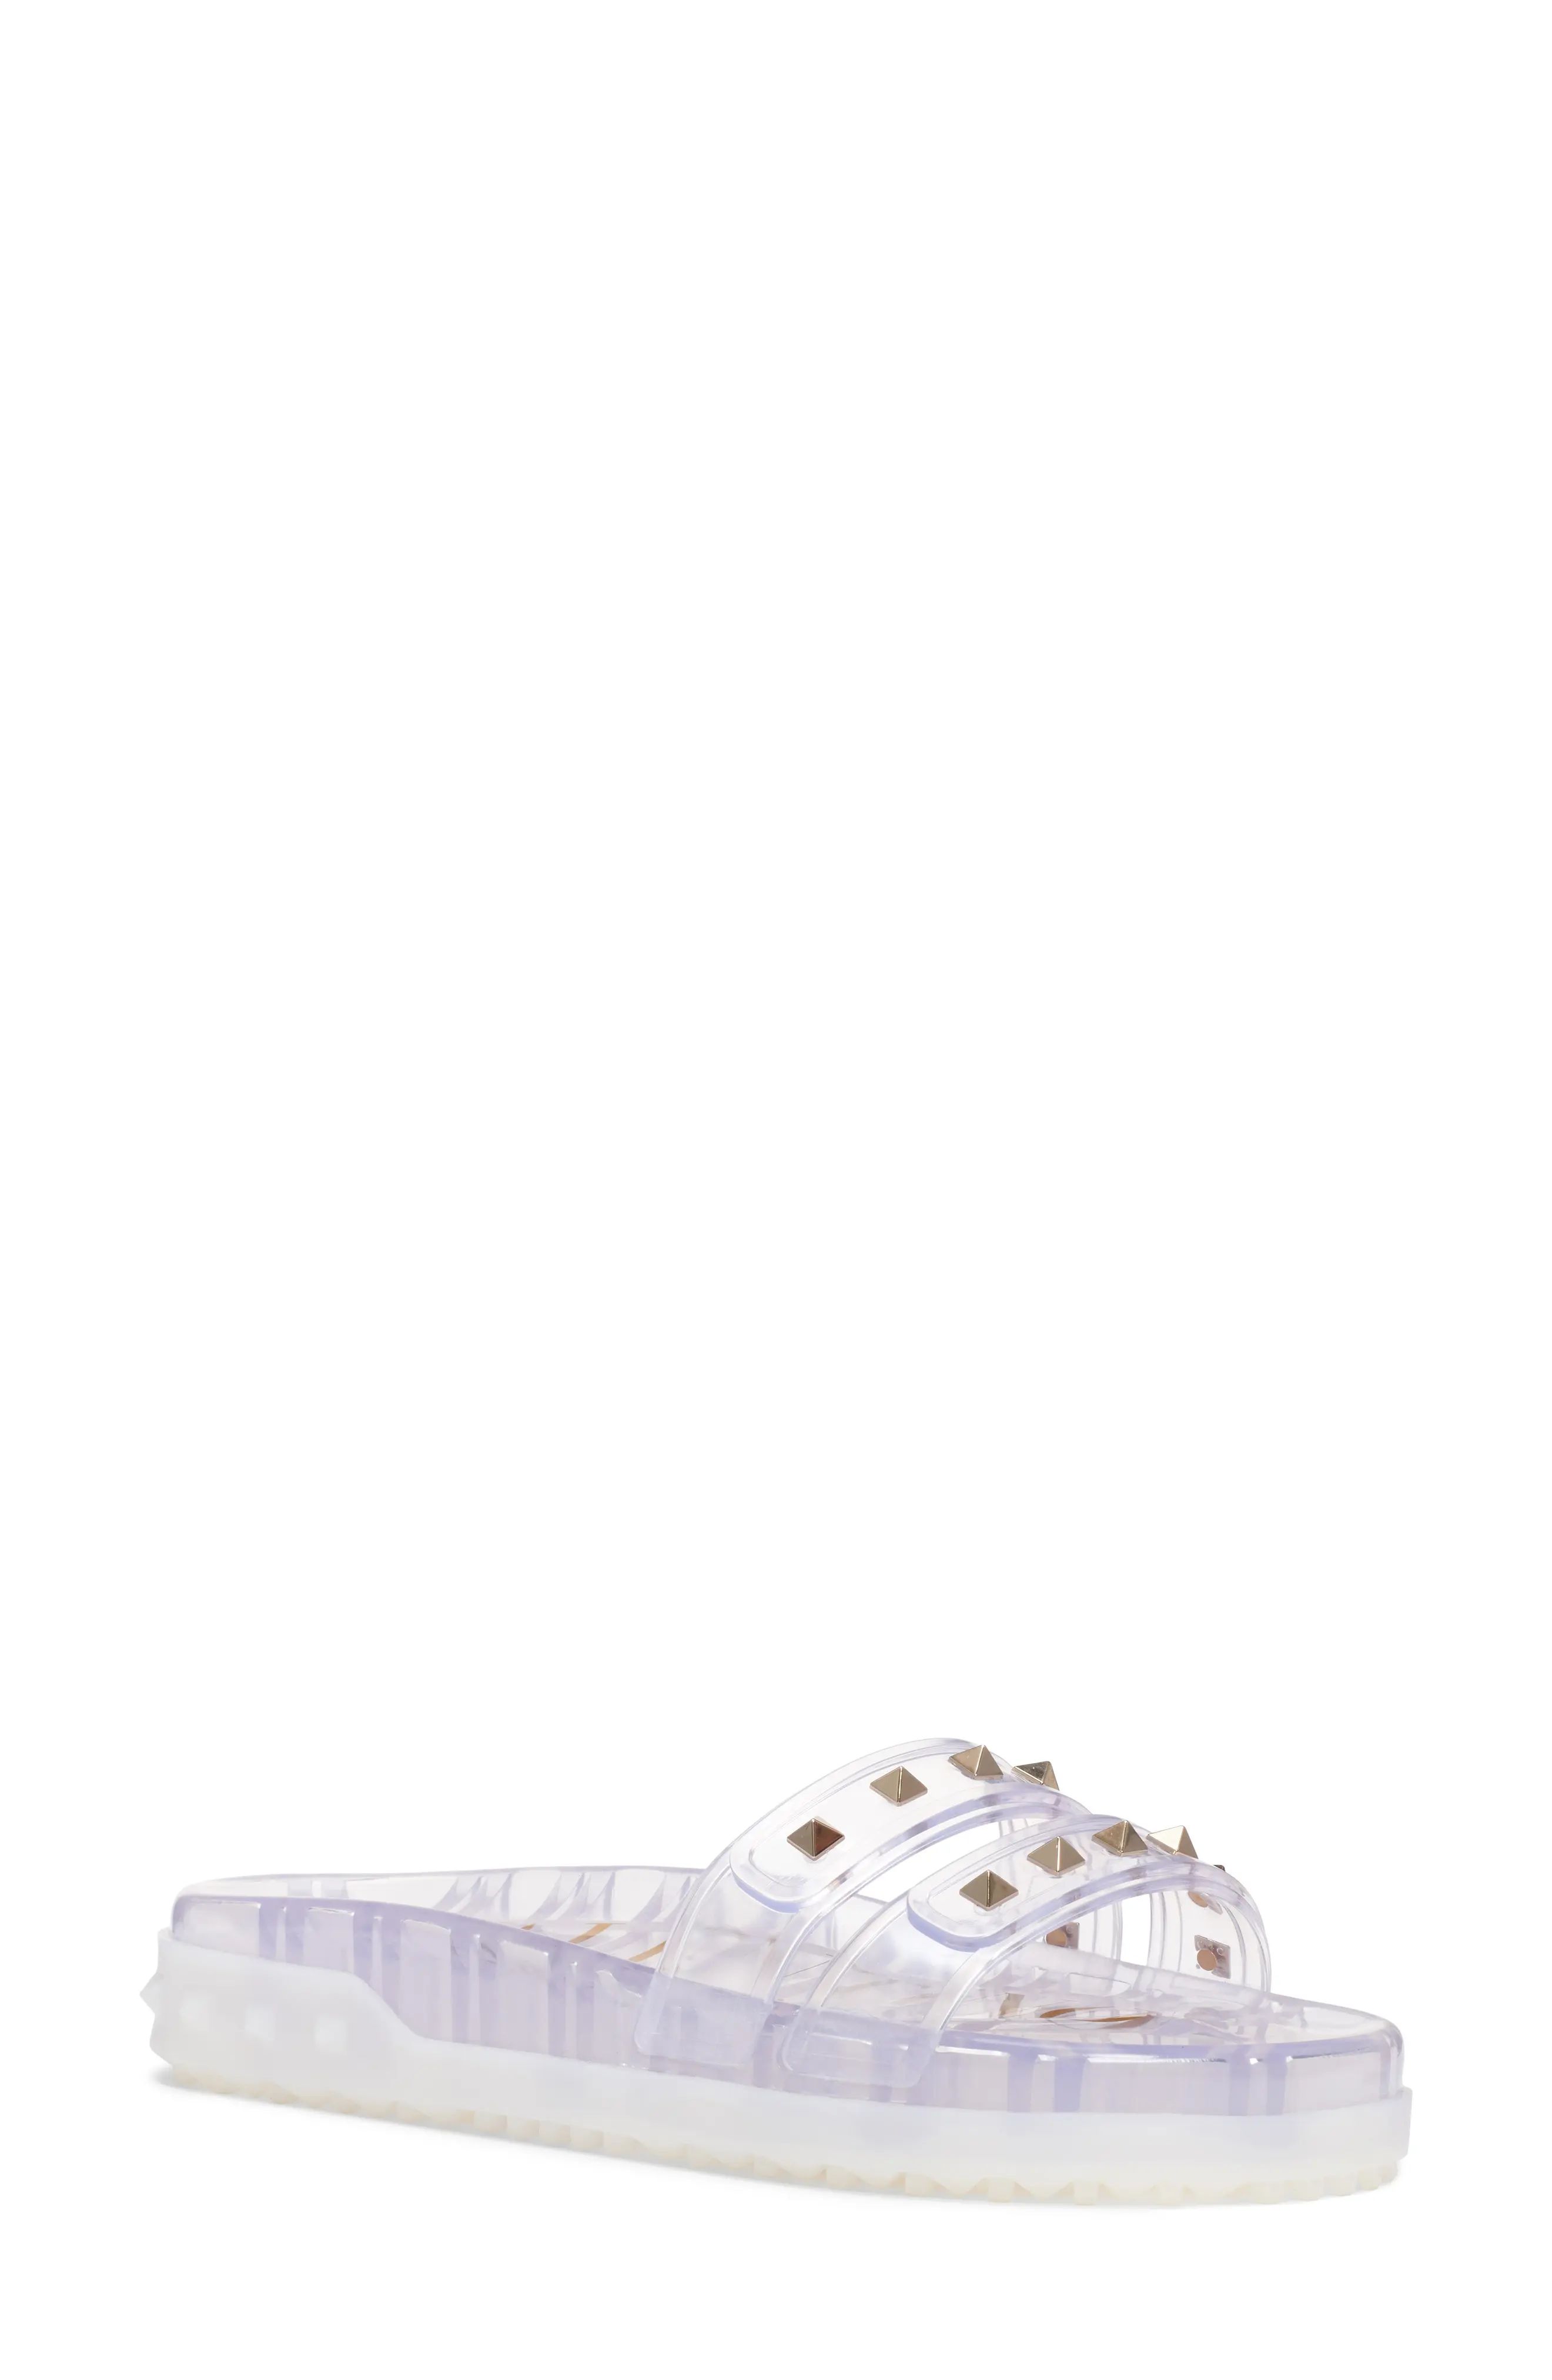 Women's Valentino Garavani Rockstud Clear Slide Sandal, Size 9US / 39EU - White | Nordstrom